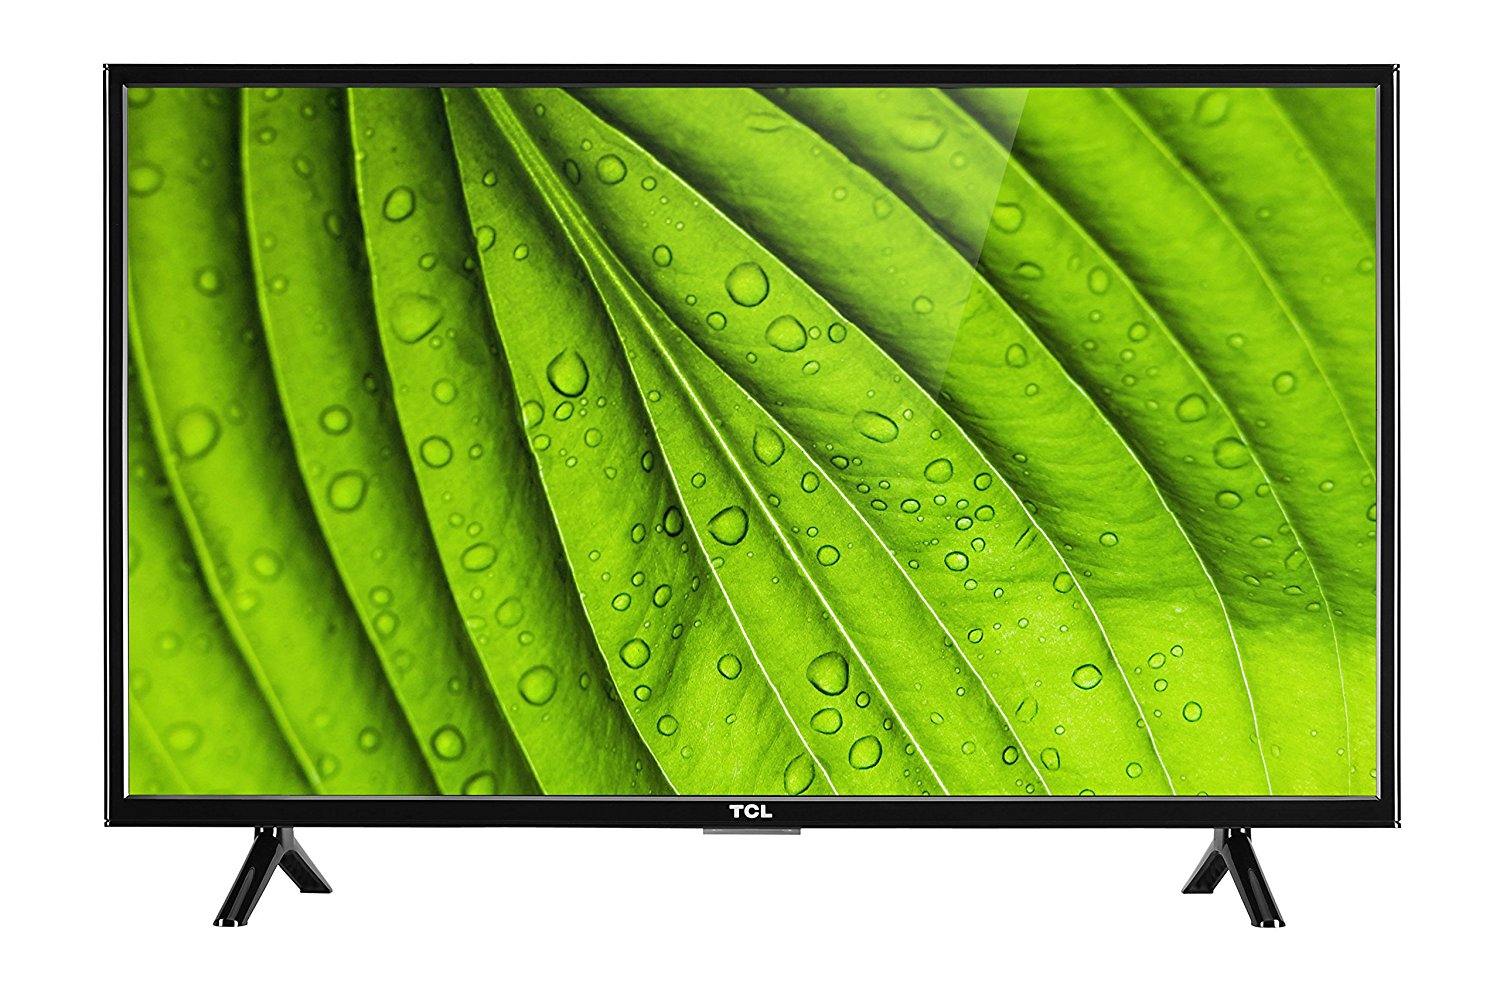 Best TCL Flat Screen TVs Your TV Set